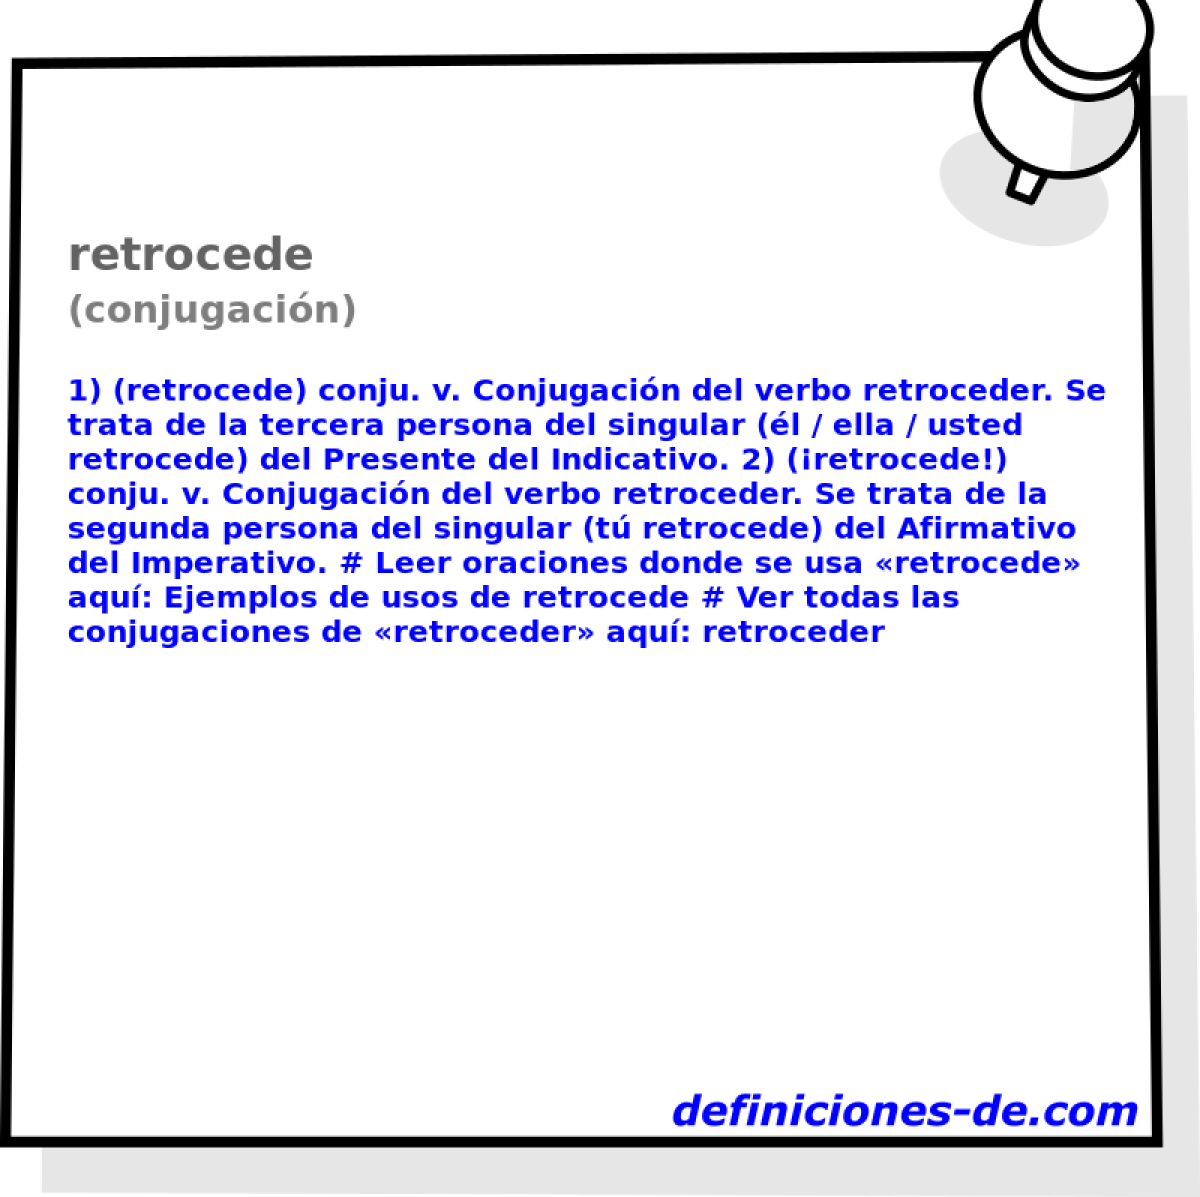 retrocede (conjugacin)